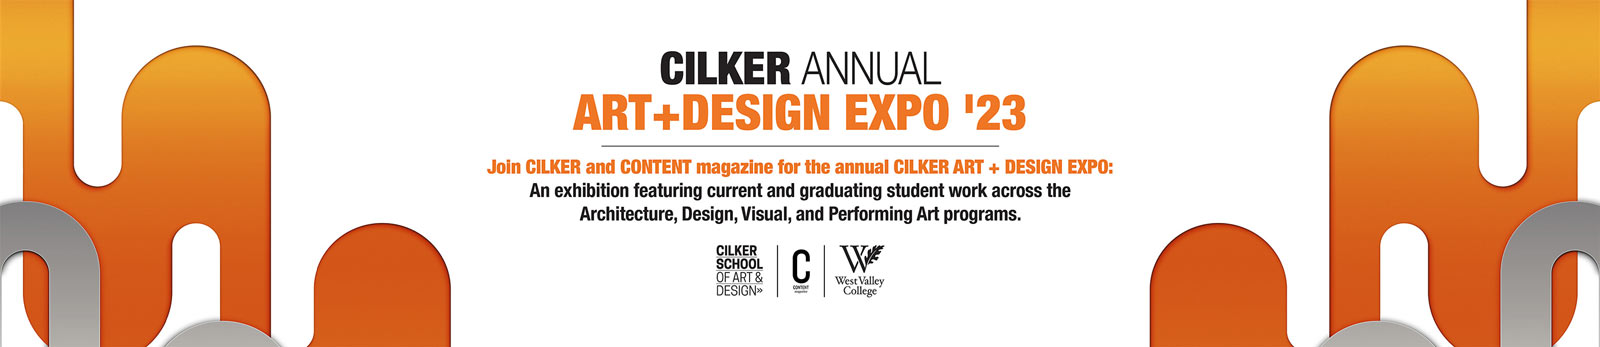 Cilker Expo event graphic in orange